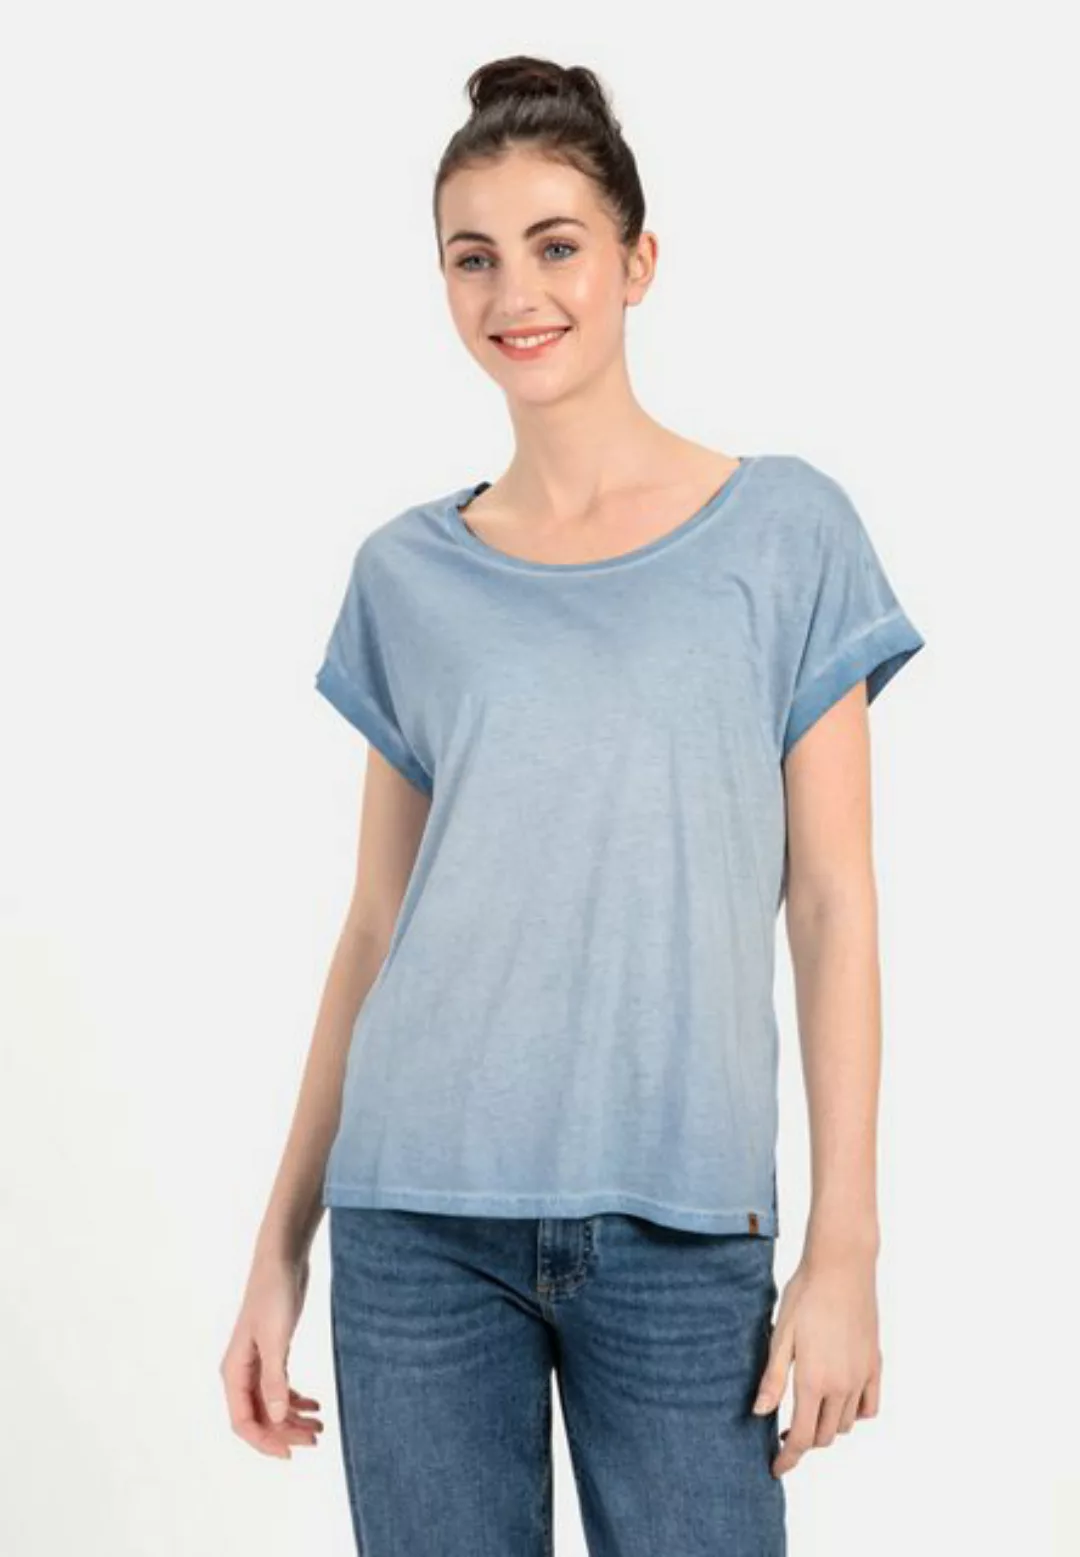 camel active T-Shirt aus softem Modal-Baumwollmix günstig online kaufen